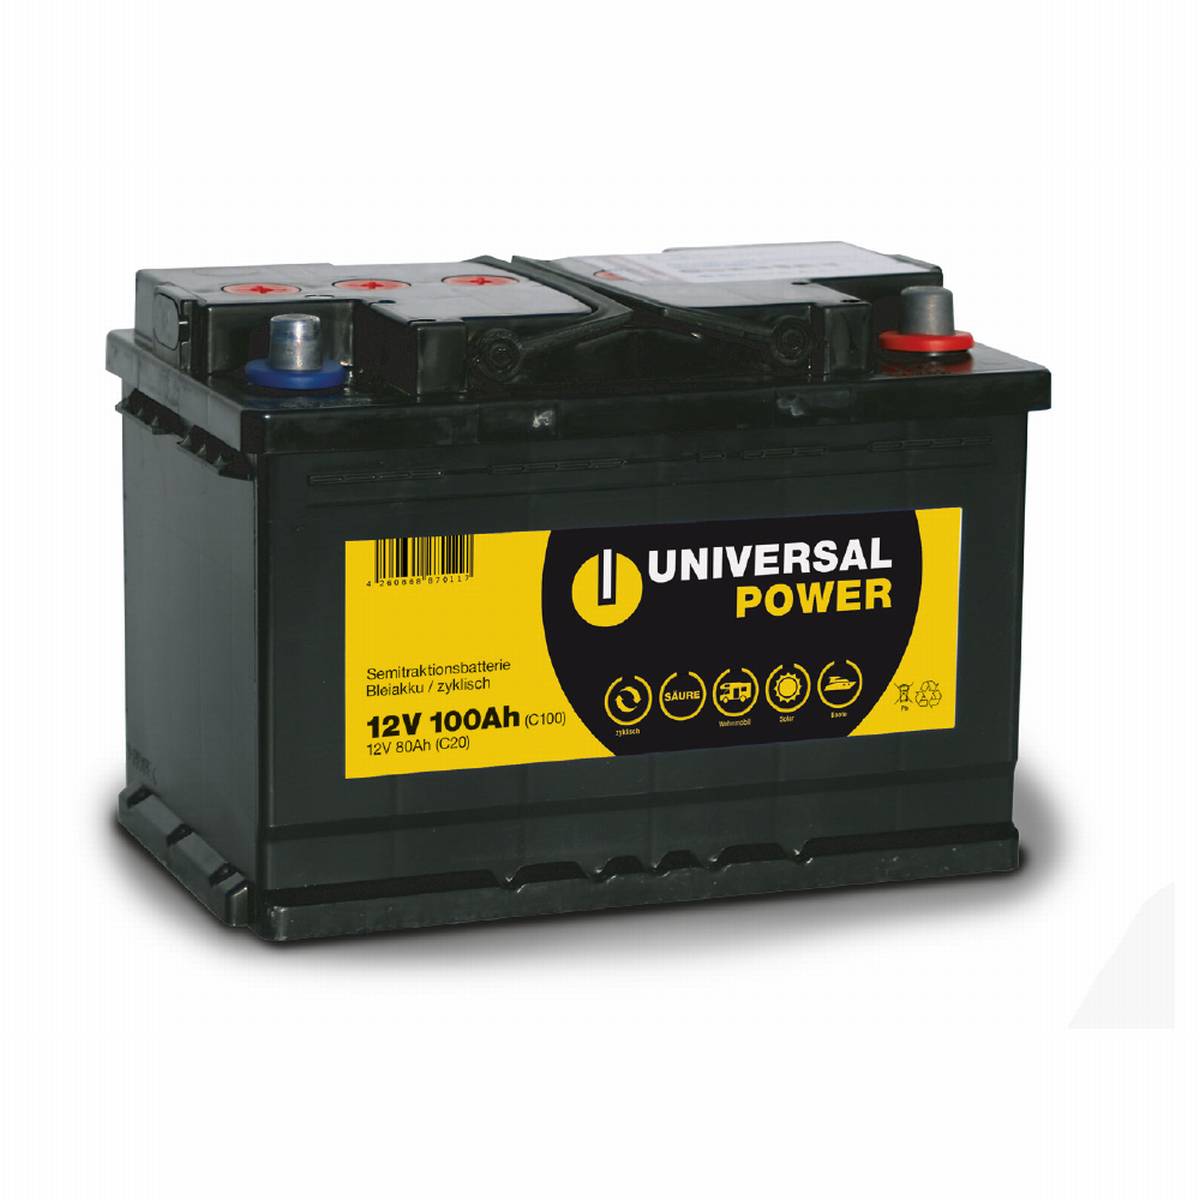 Universal Power Semitraction UPA12-100 12V 100Ah (C100) Batteria solare per camper a uso ciclico